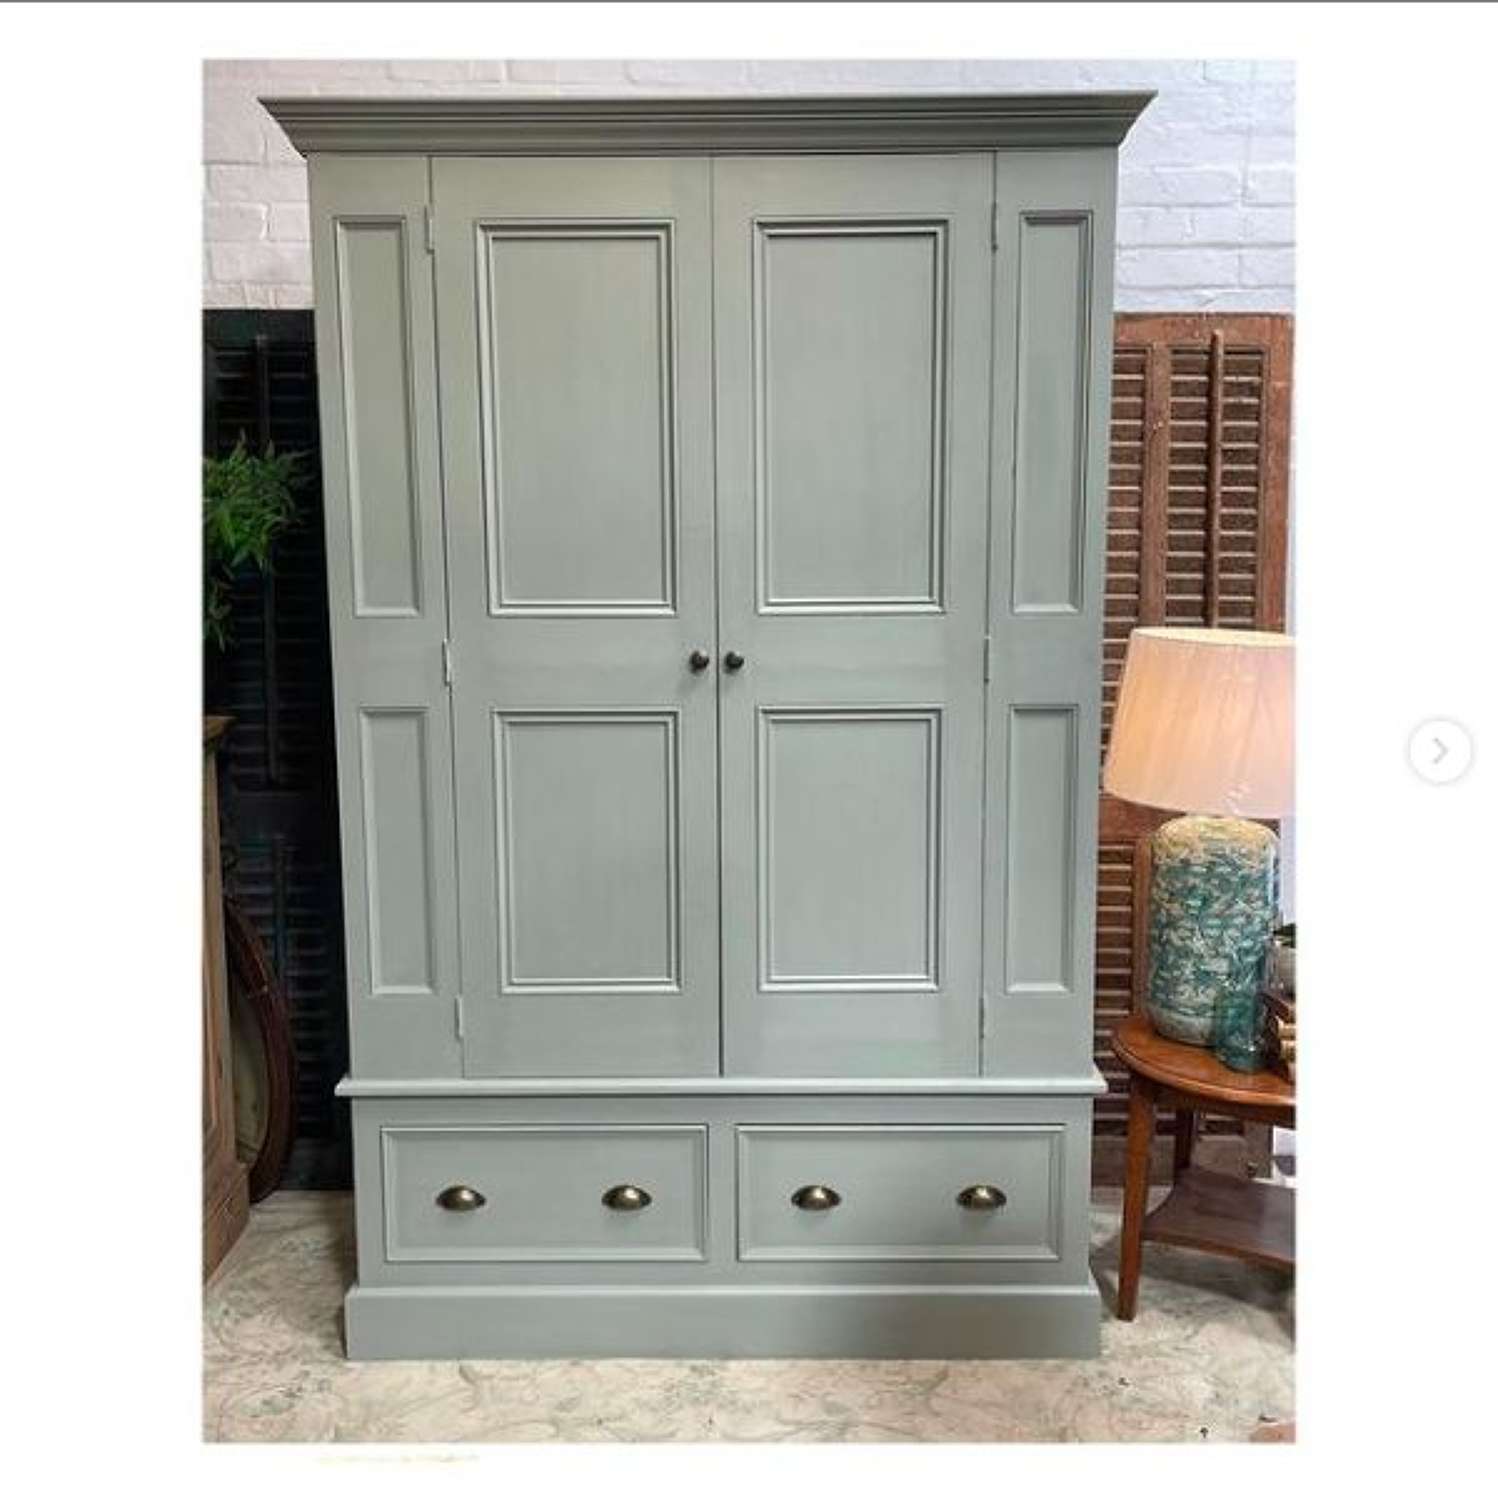 Regency style panelled wardrobe with drawers below.